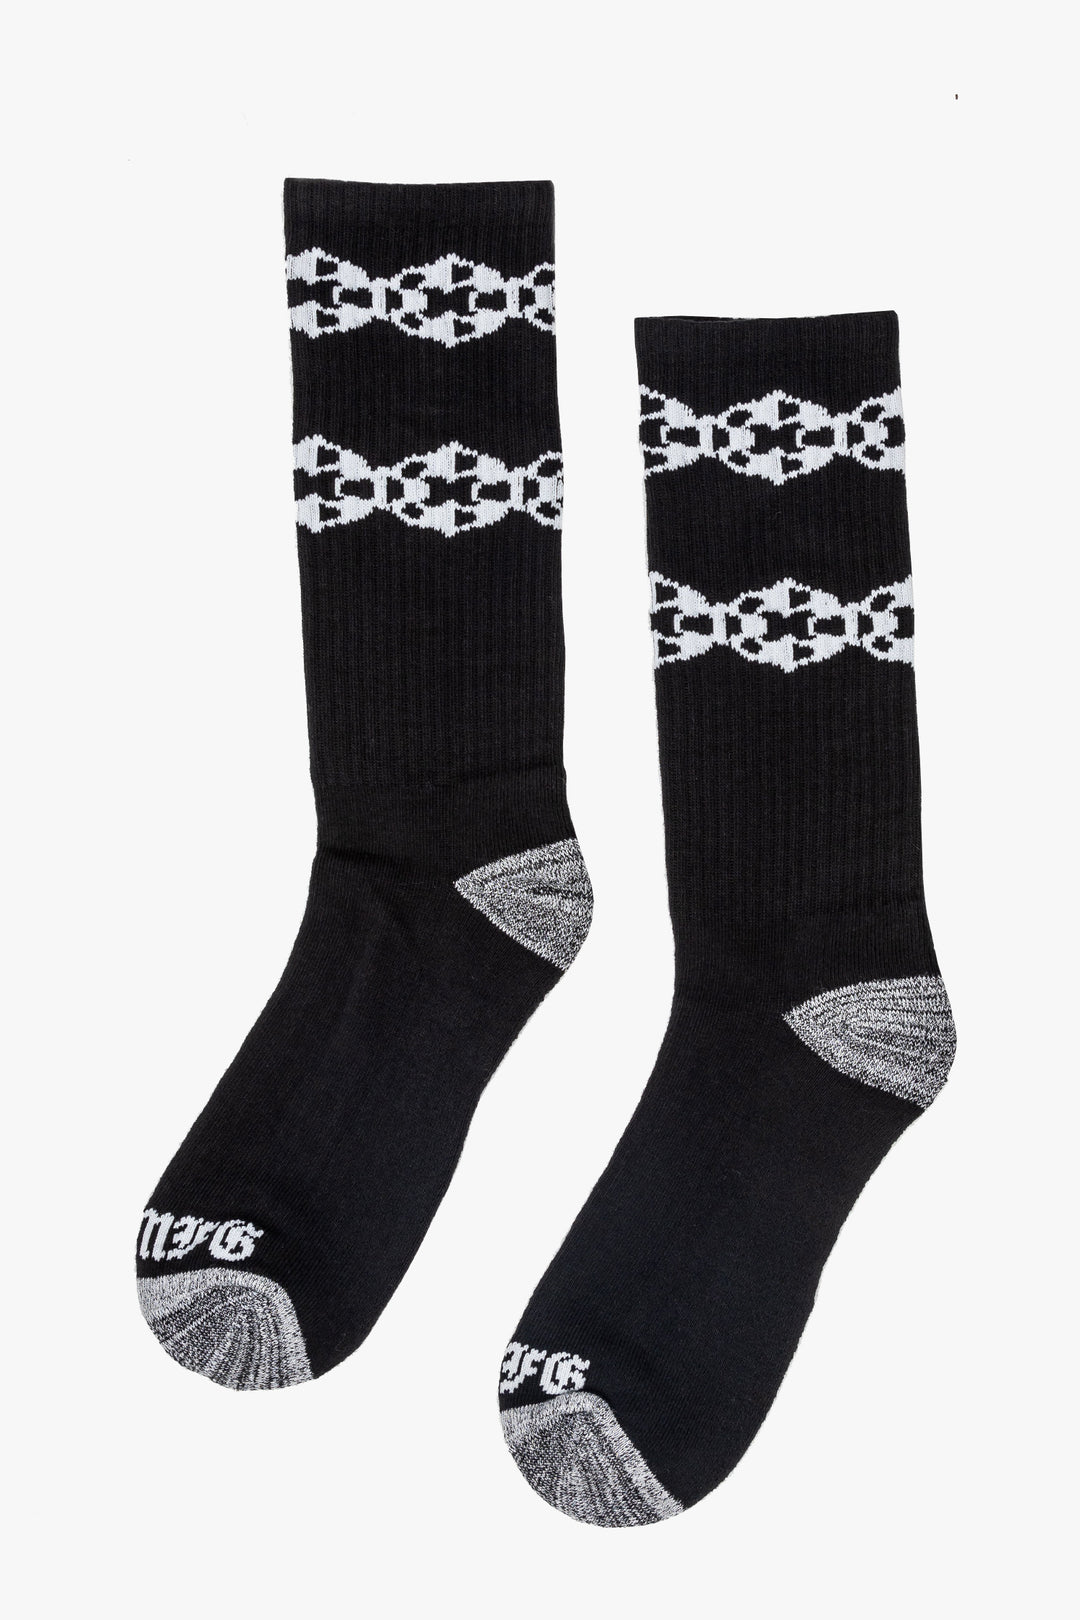 Chain Socks - Indestructible MFG